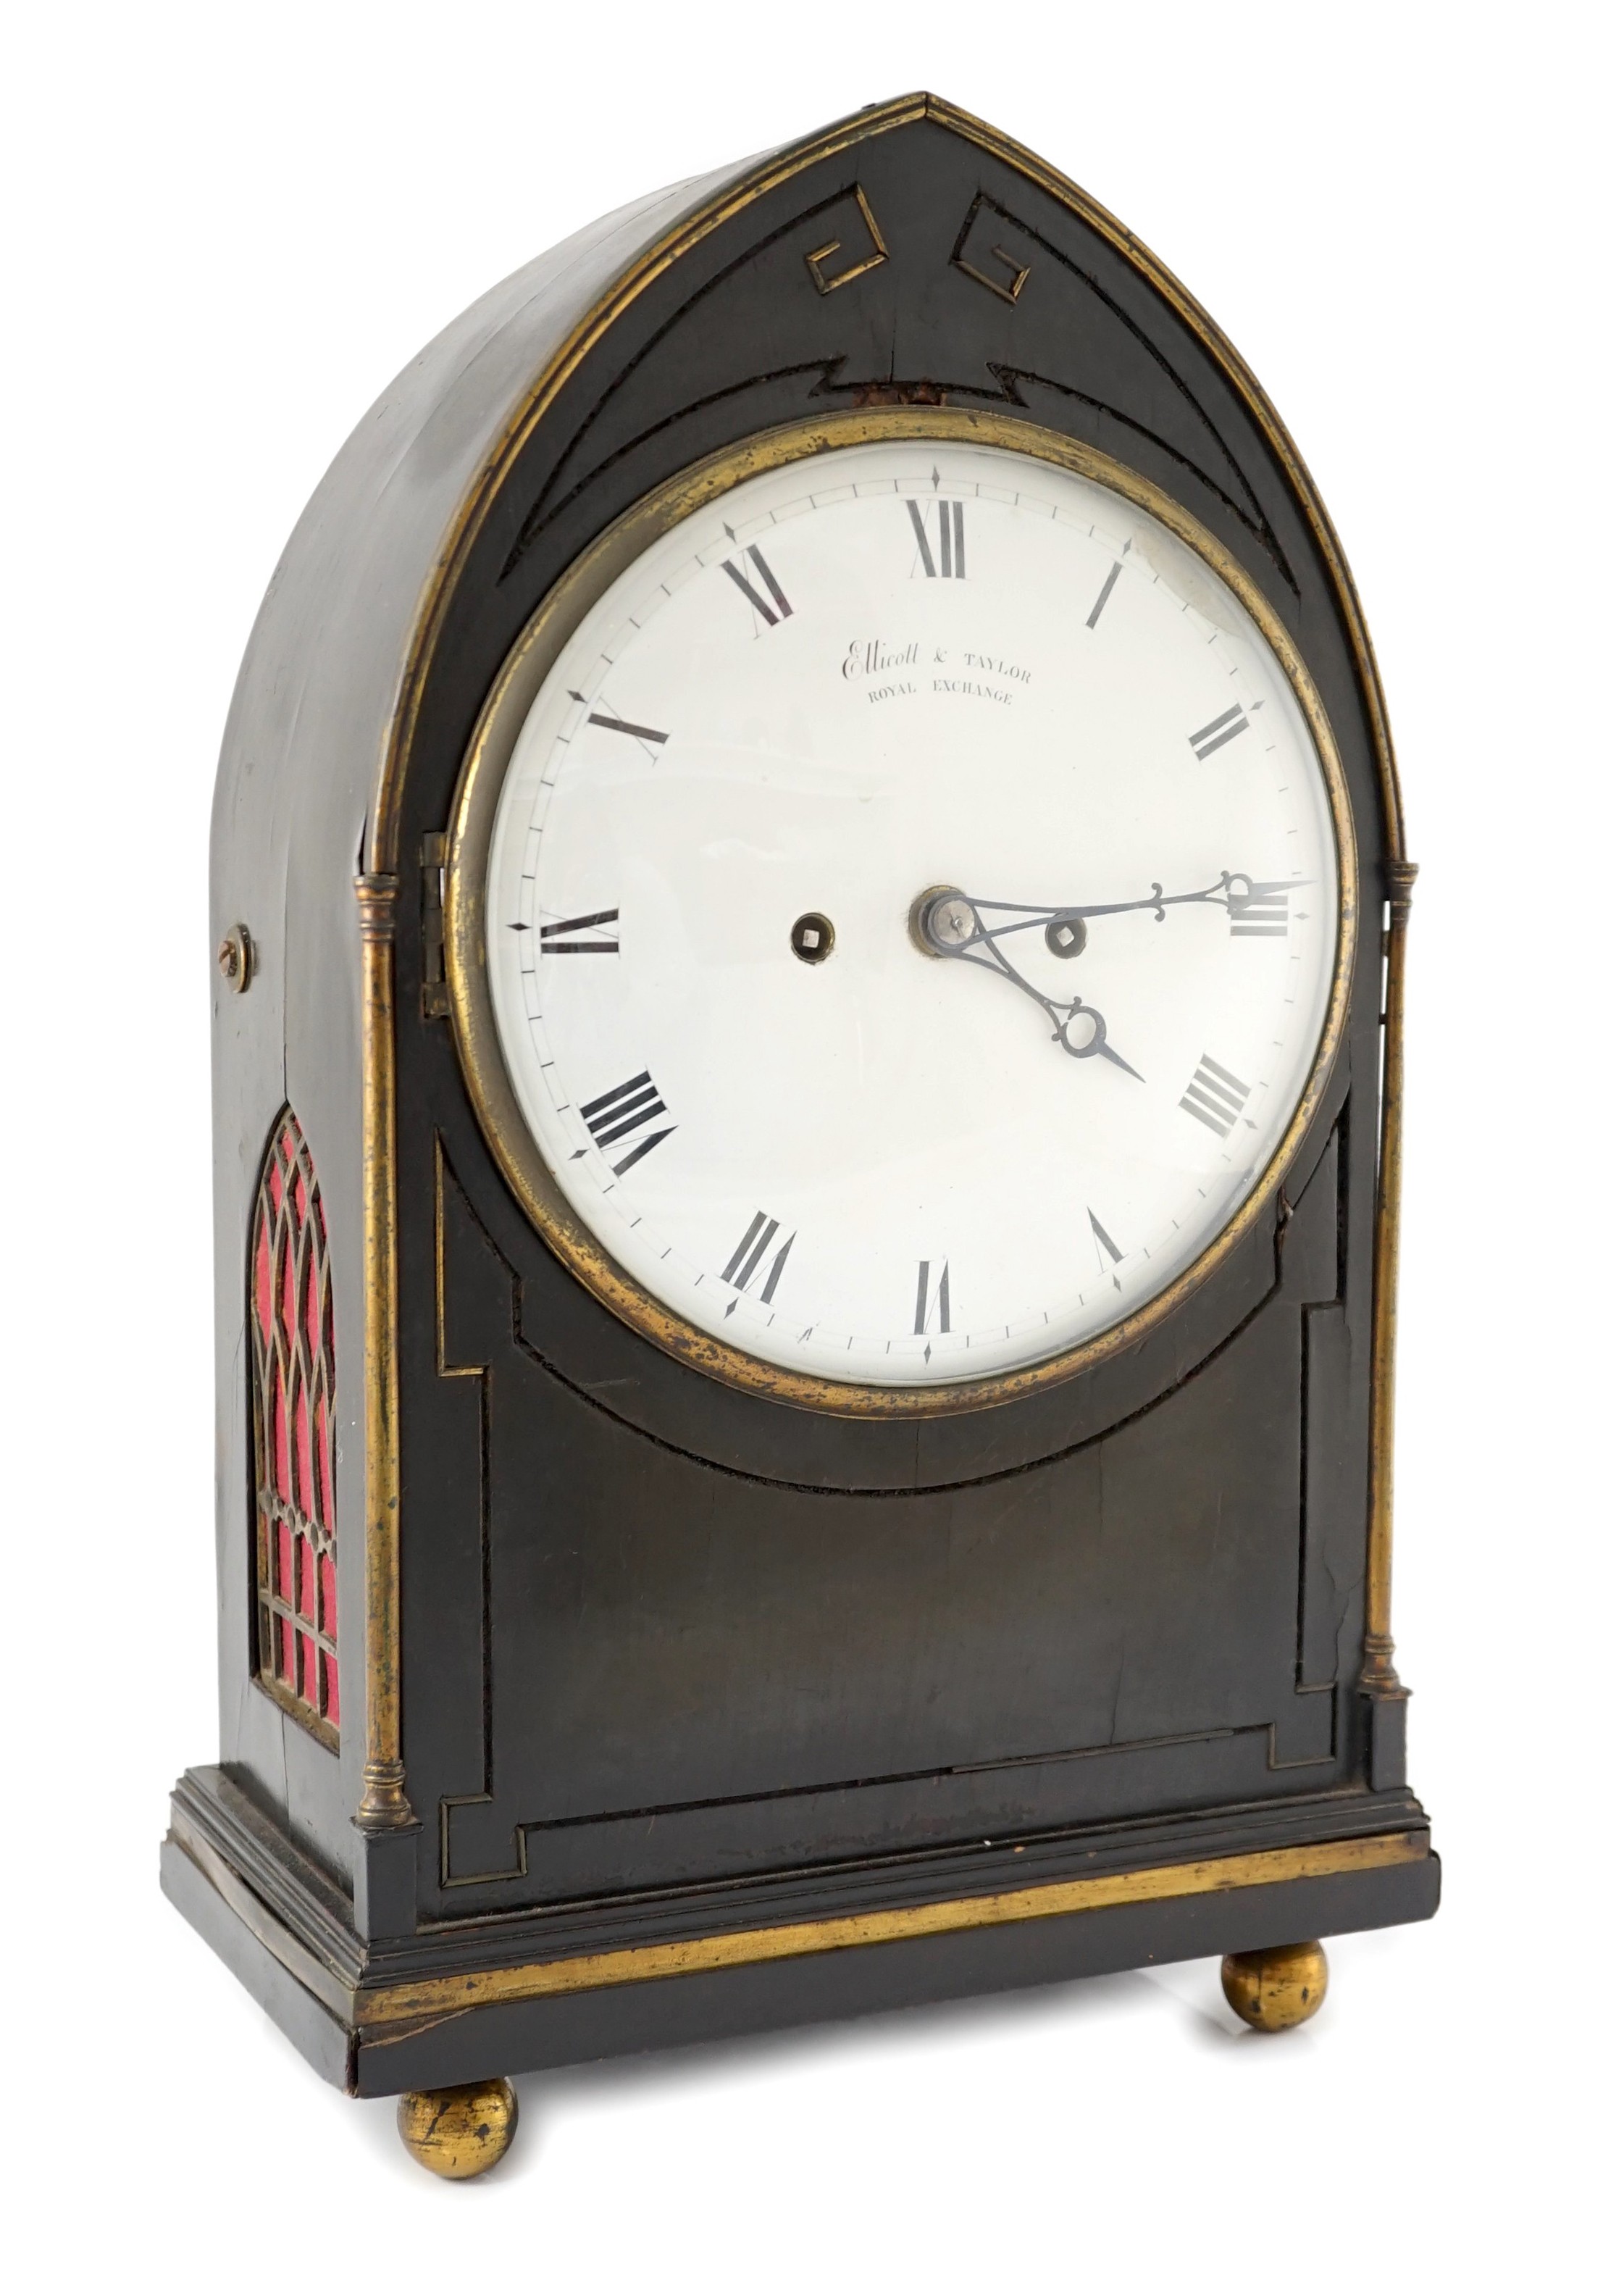 Ellicott & Taylor, Royal Exchange. A Regency lancet shaped ebonised bracket clock, with enamelled